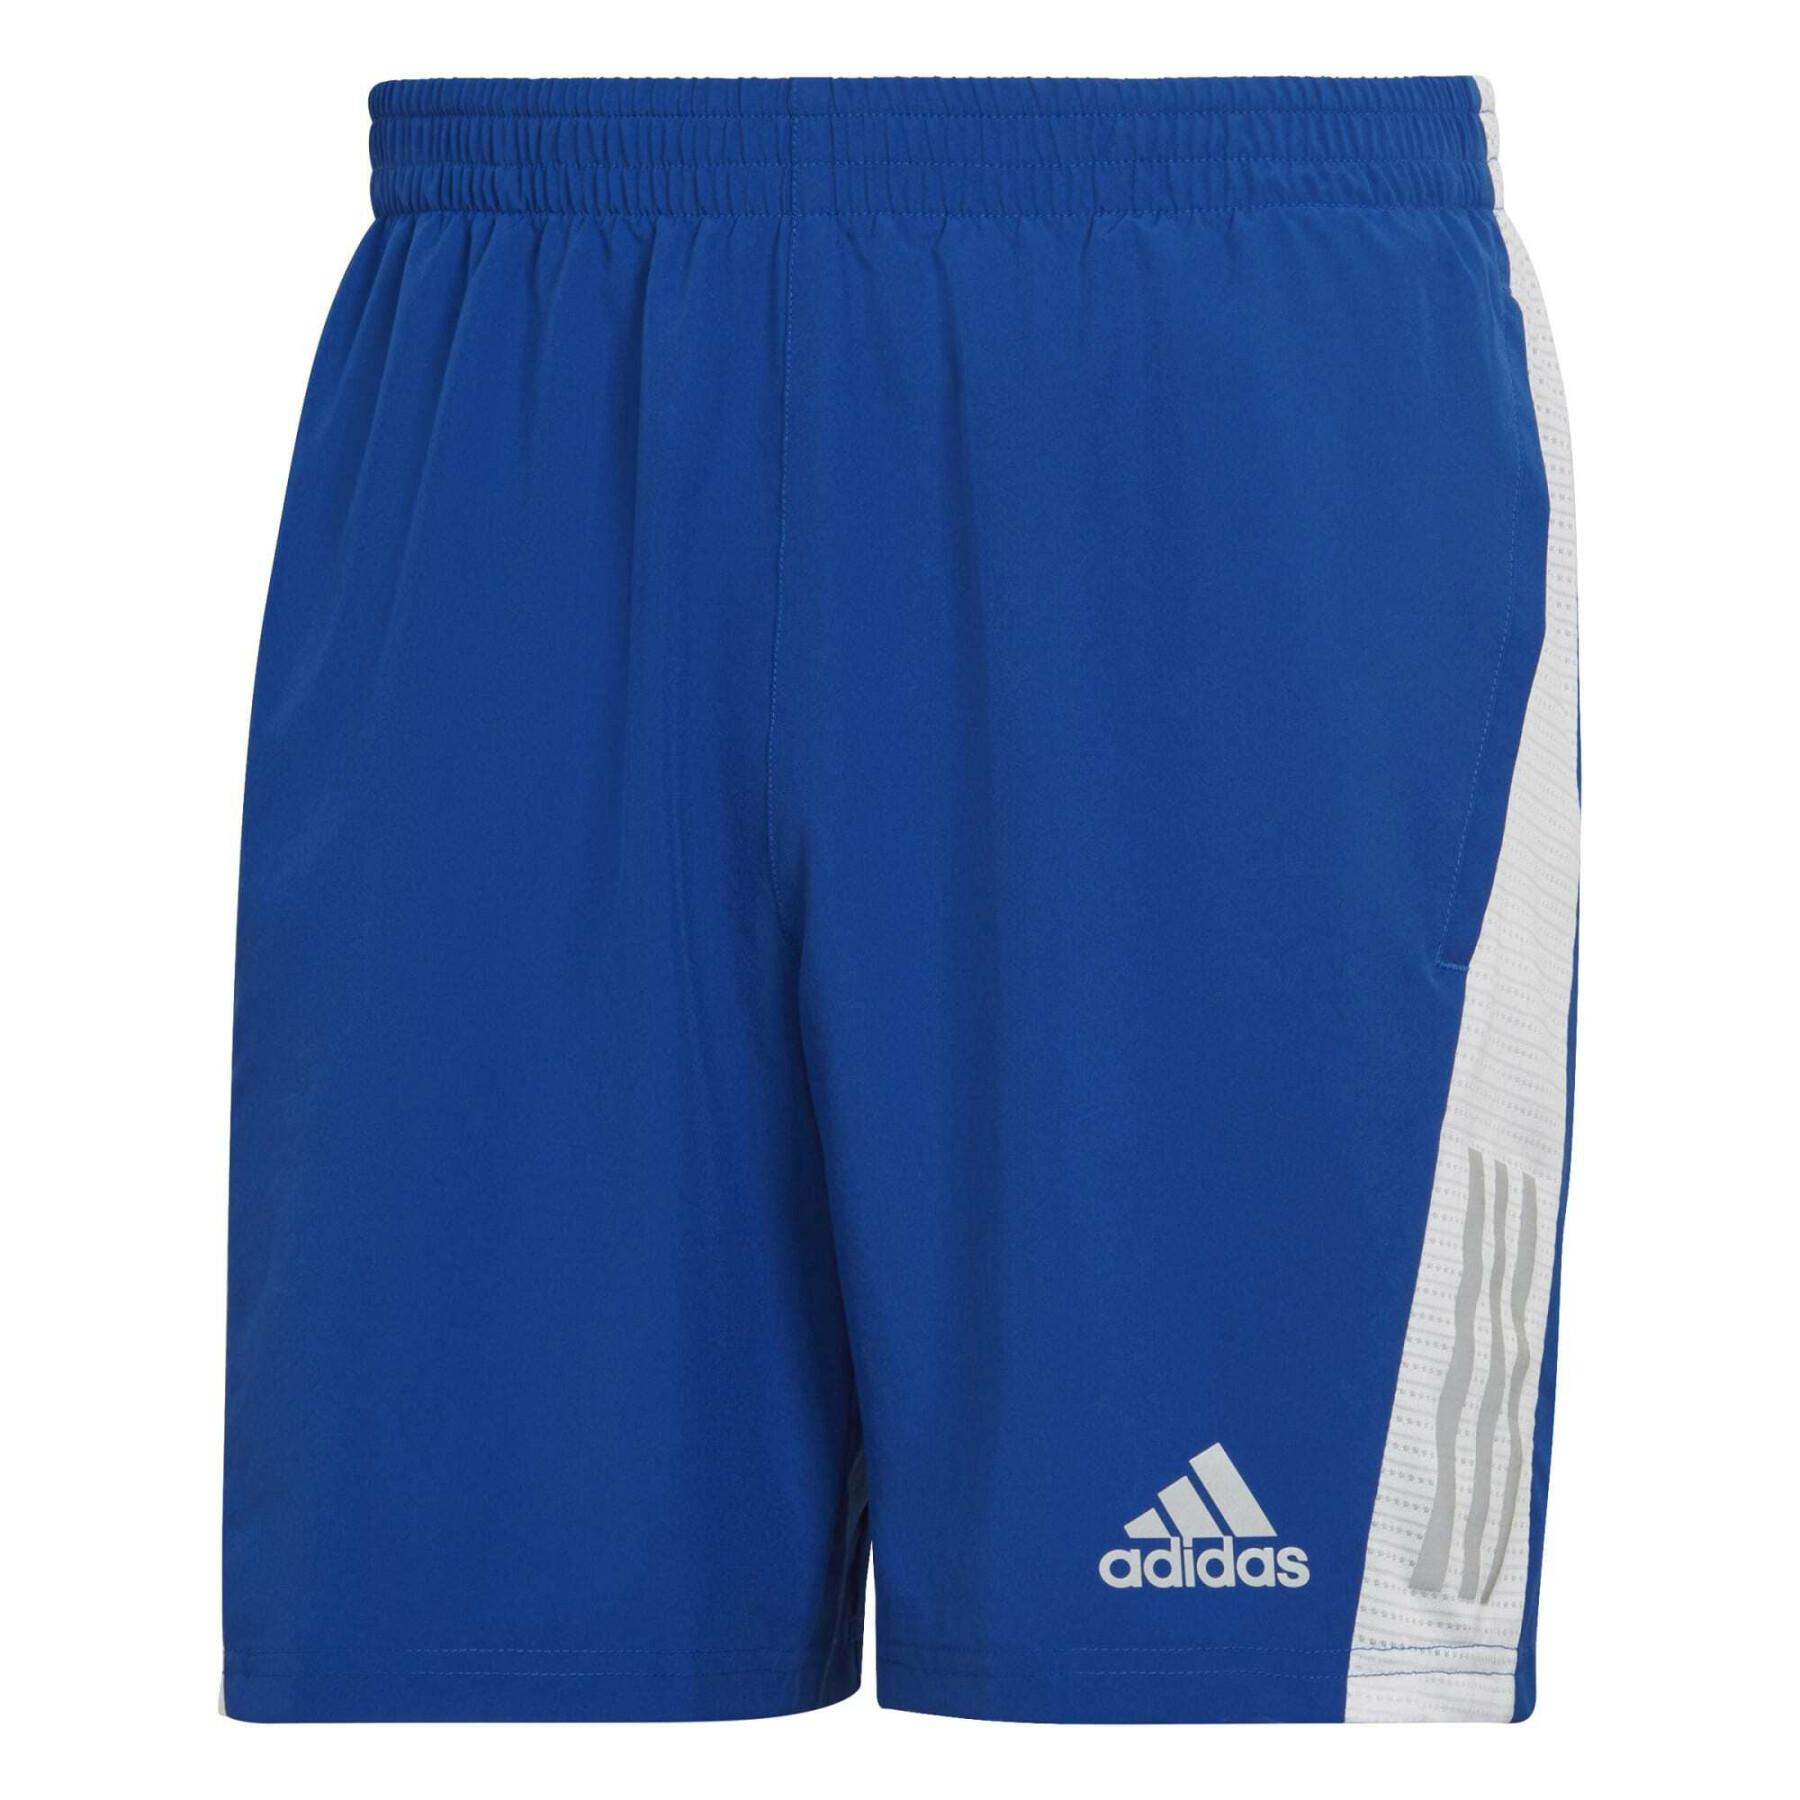 Short adidas 38 Own the Run - Shorts - Textile - Handball wear